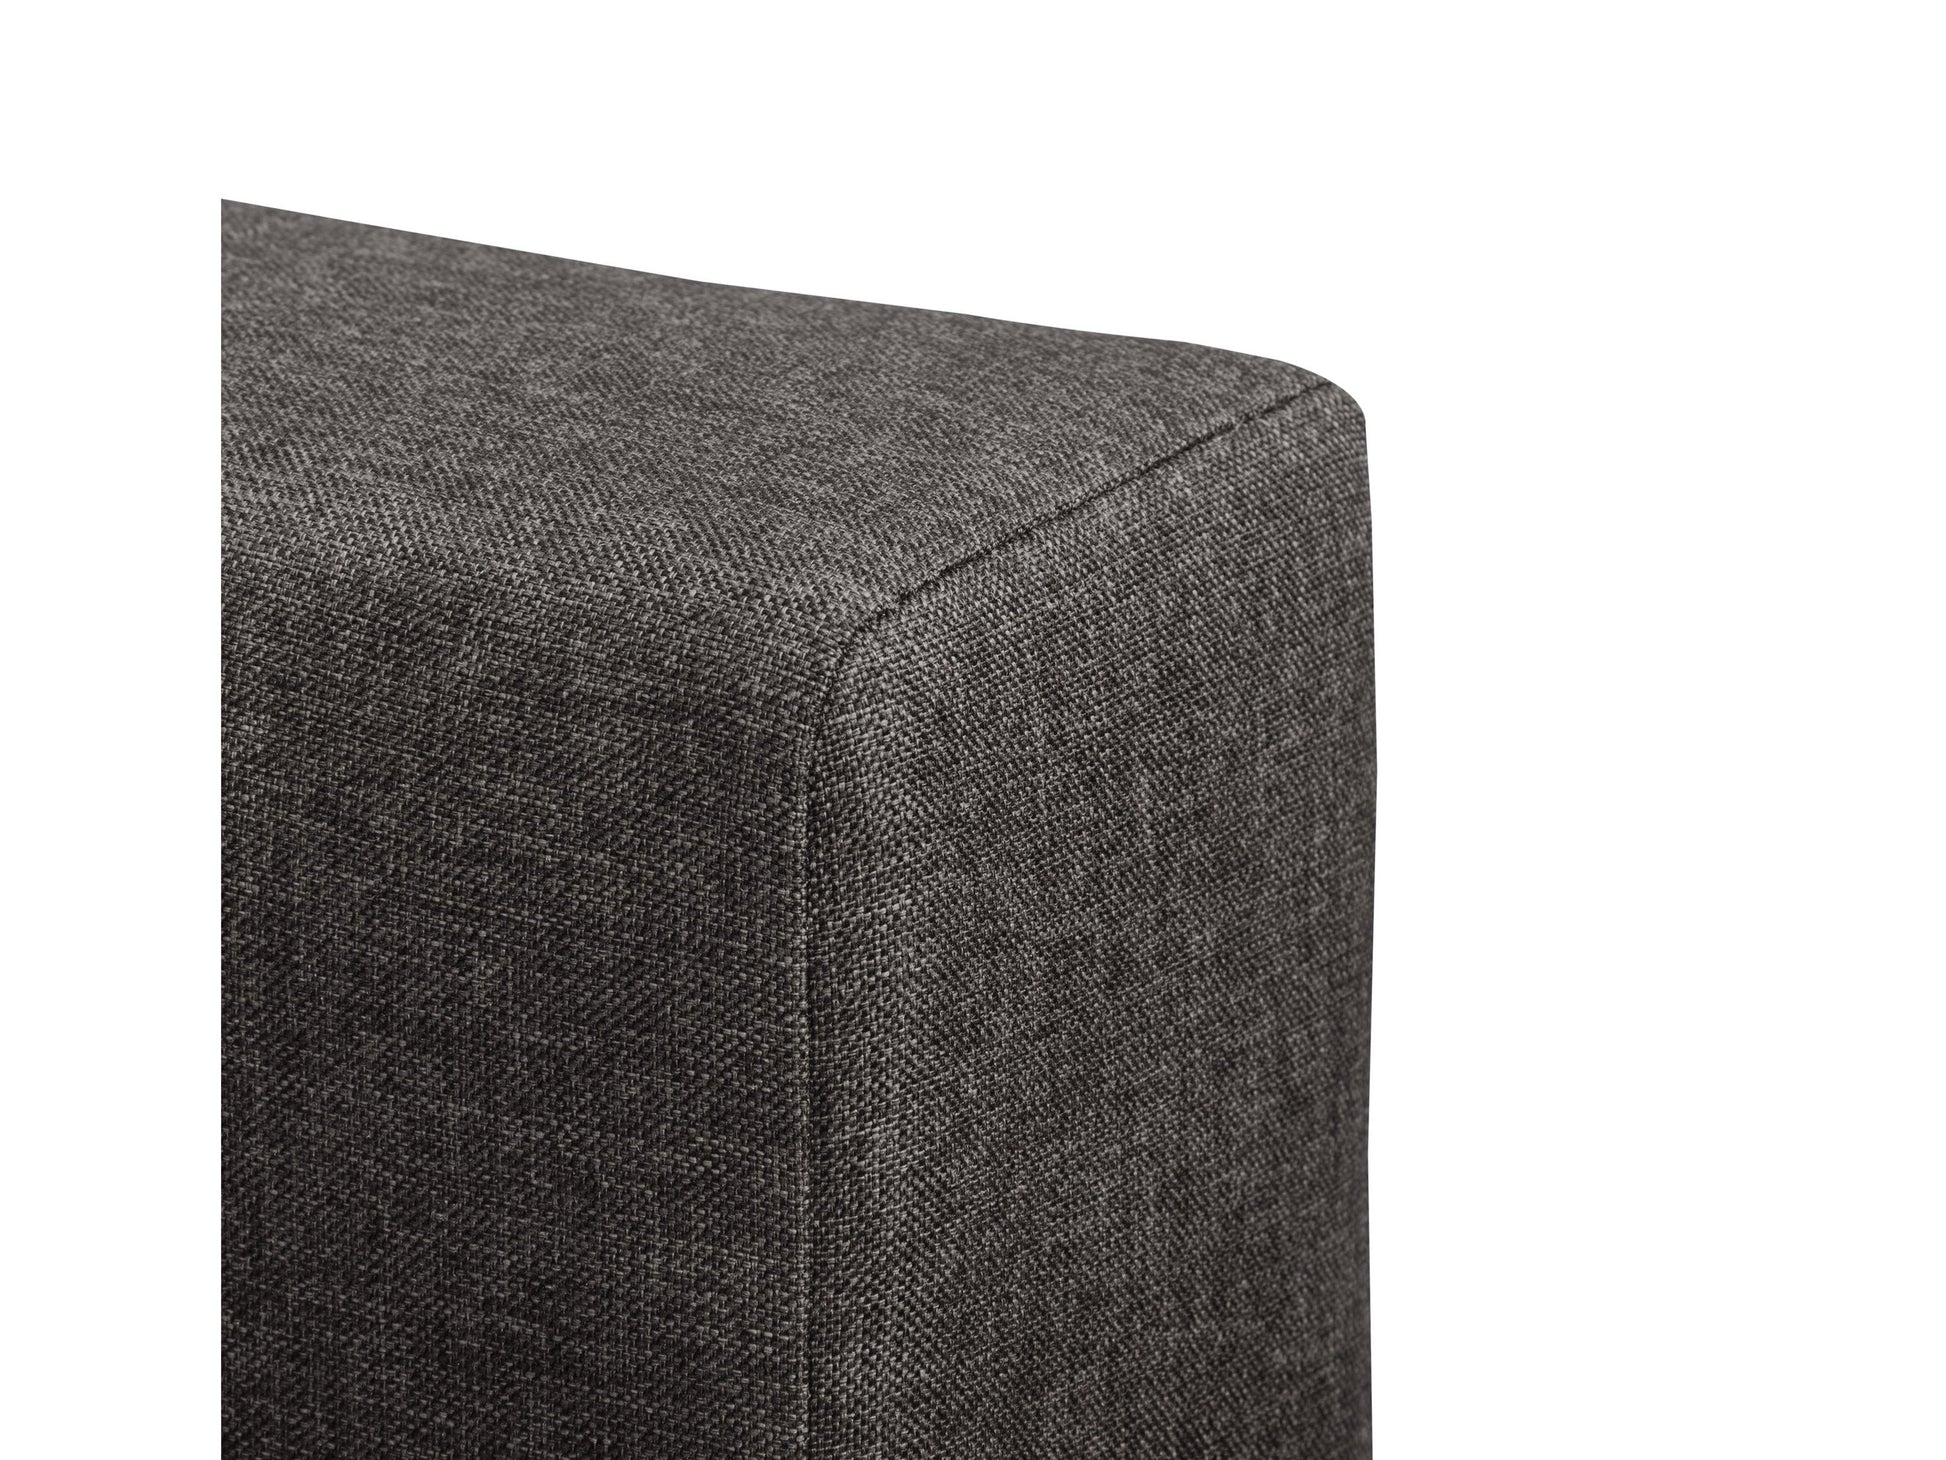 dark grey Button Tufted Queen Bed Nova Ridge Collection detail image by CorLiving#color_nova-ridge-dark-grey